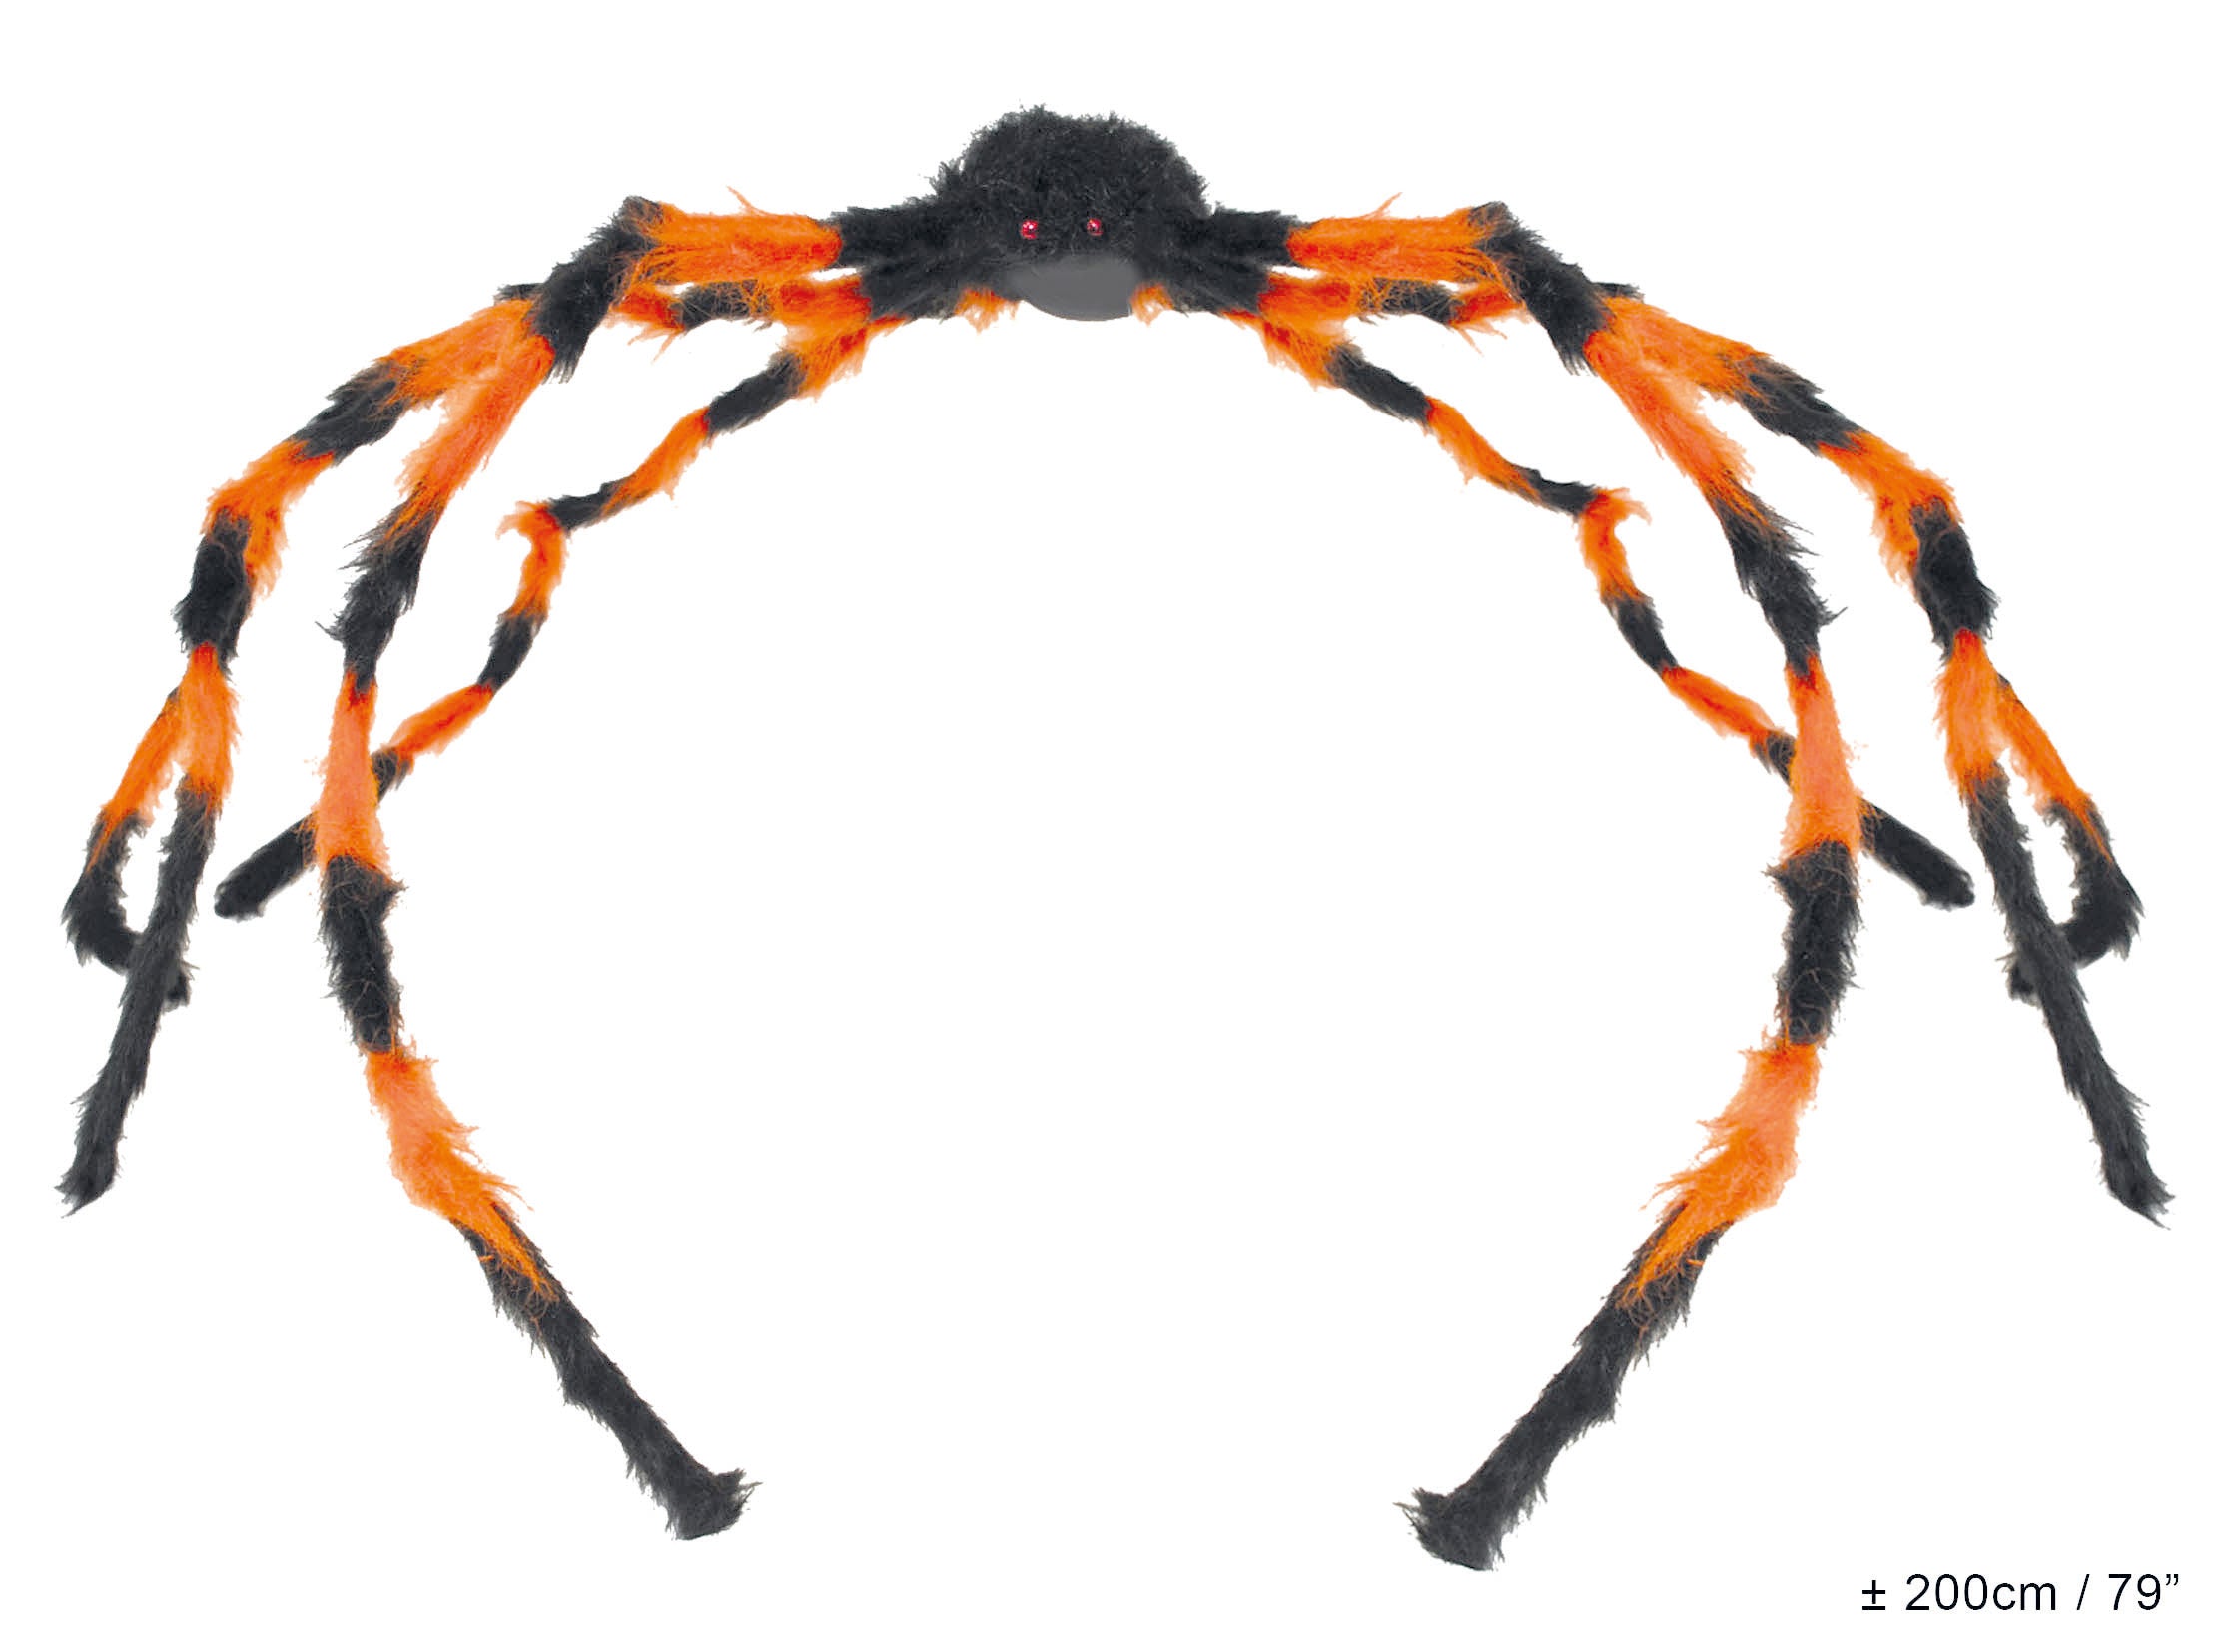 Furry Black and Orange Spider